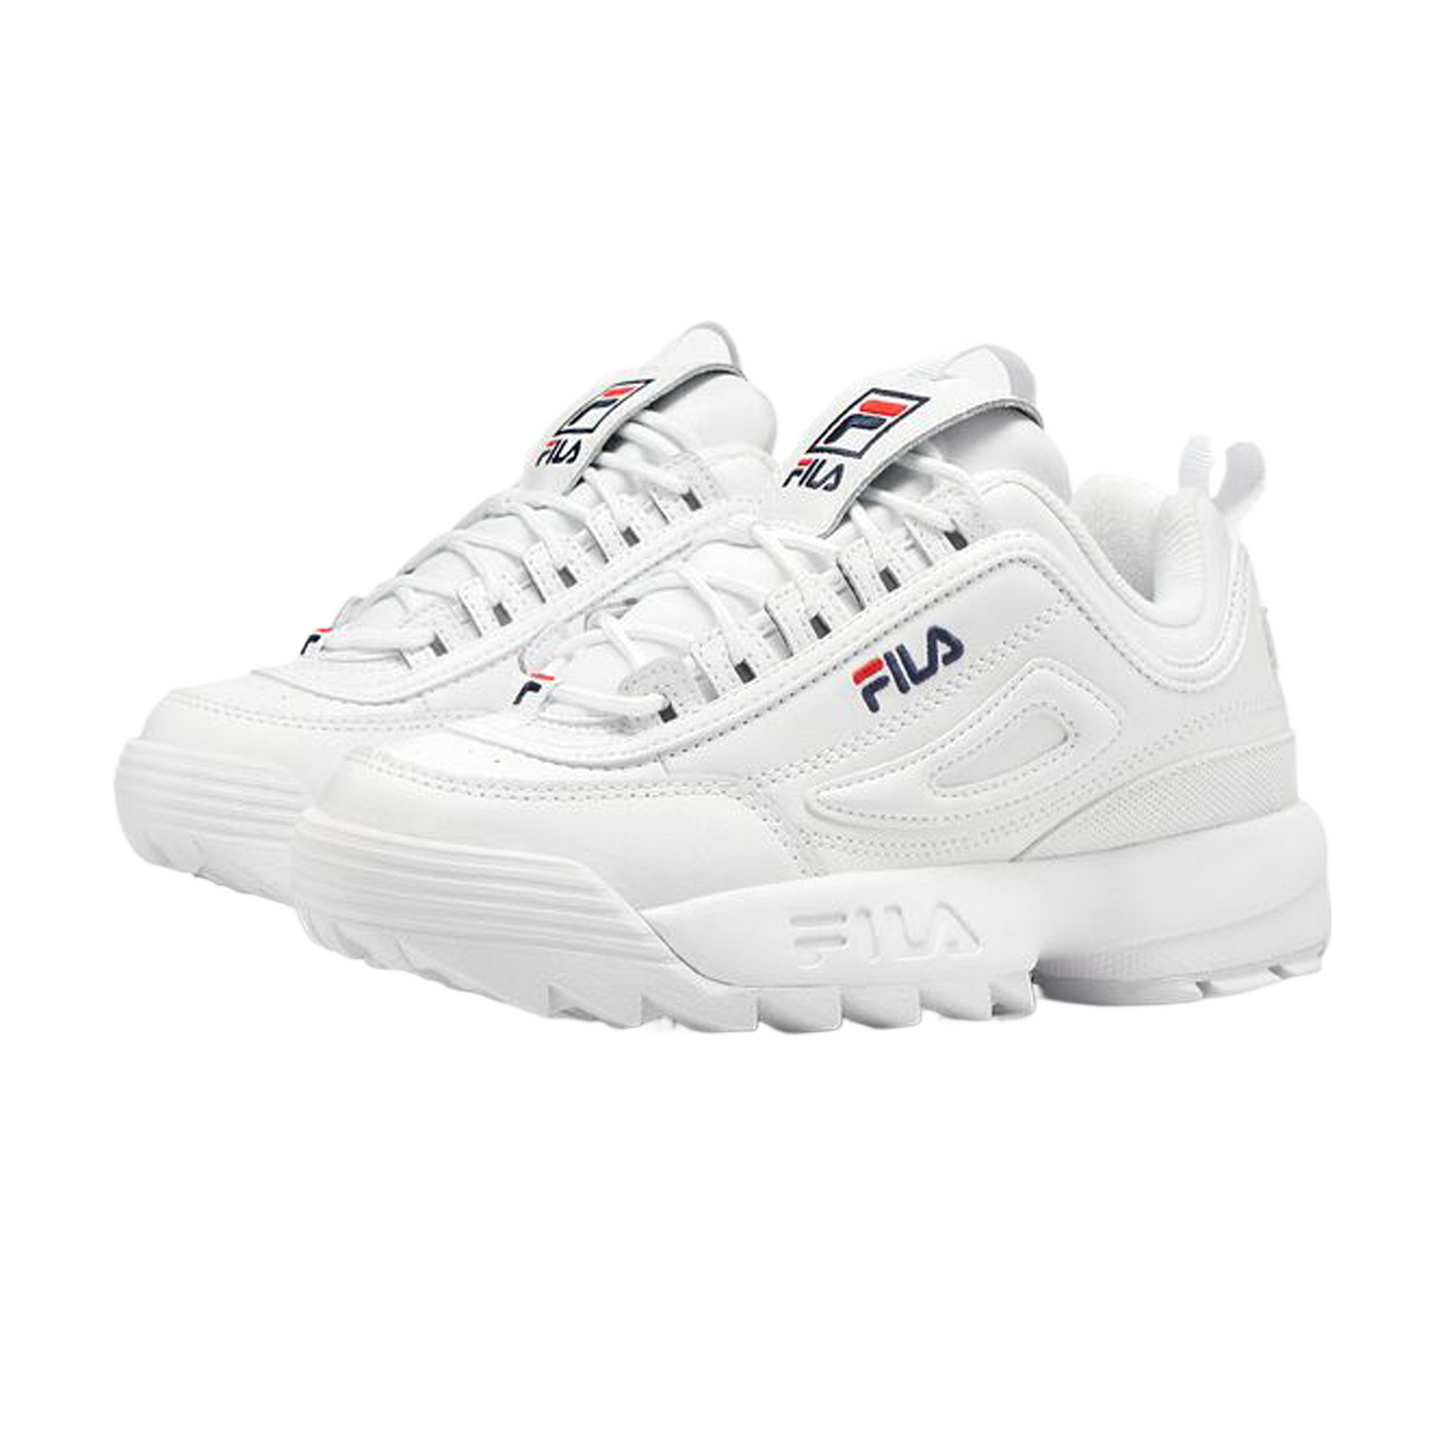 Fila Men's Disruptor II Premium Shoes White/Navy/Red 1FM00139-125